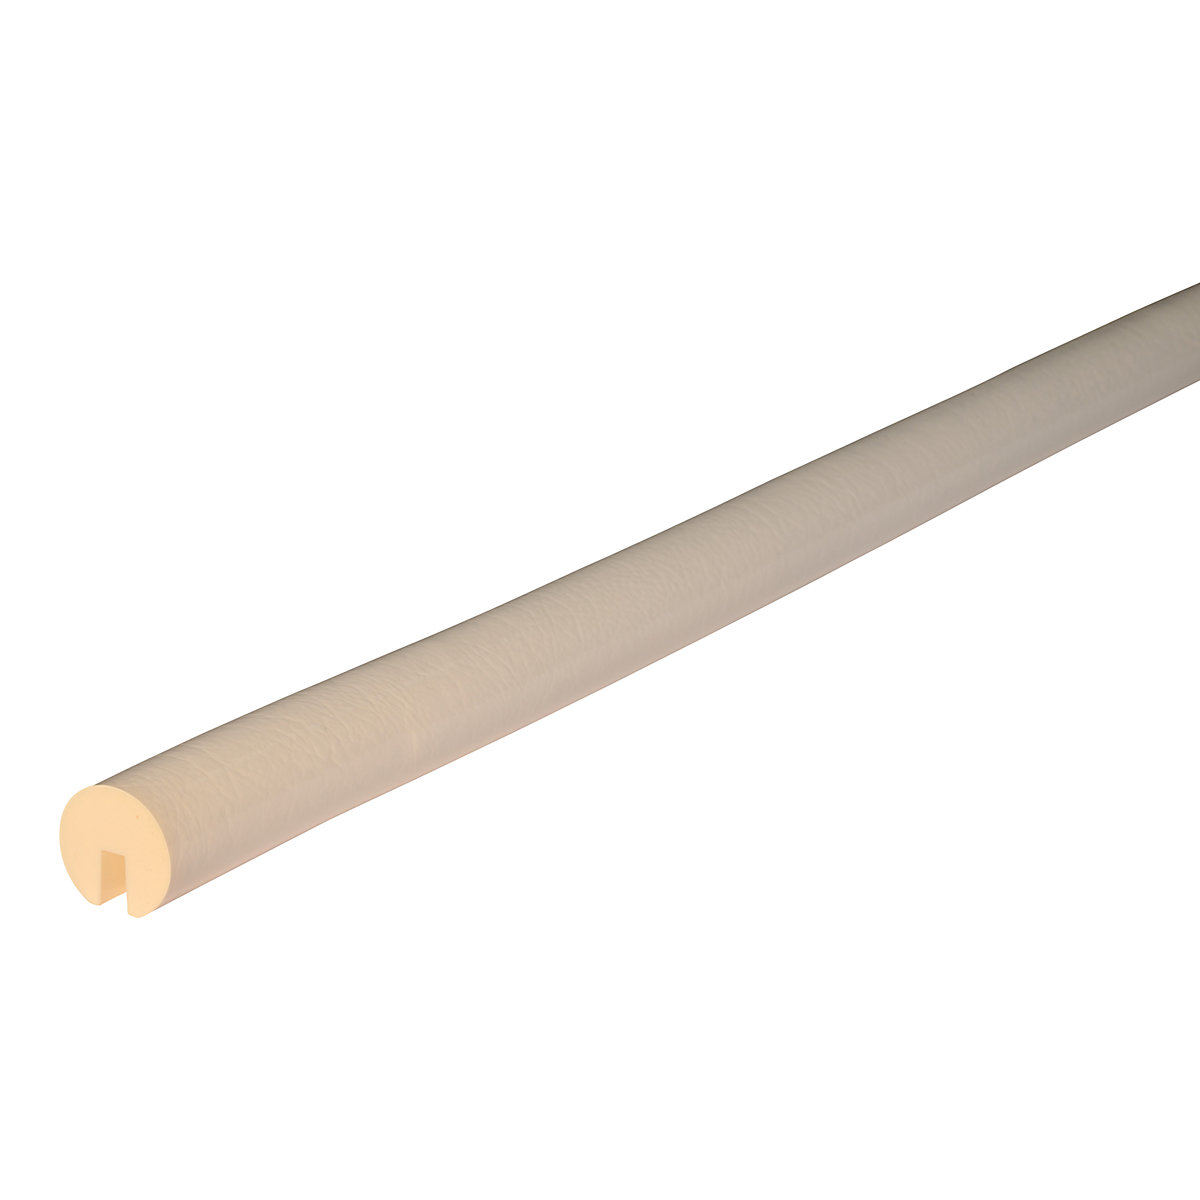 Knuffi® edge protection – SHG, type B, 1 x 5 m roll, white-20